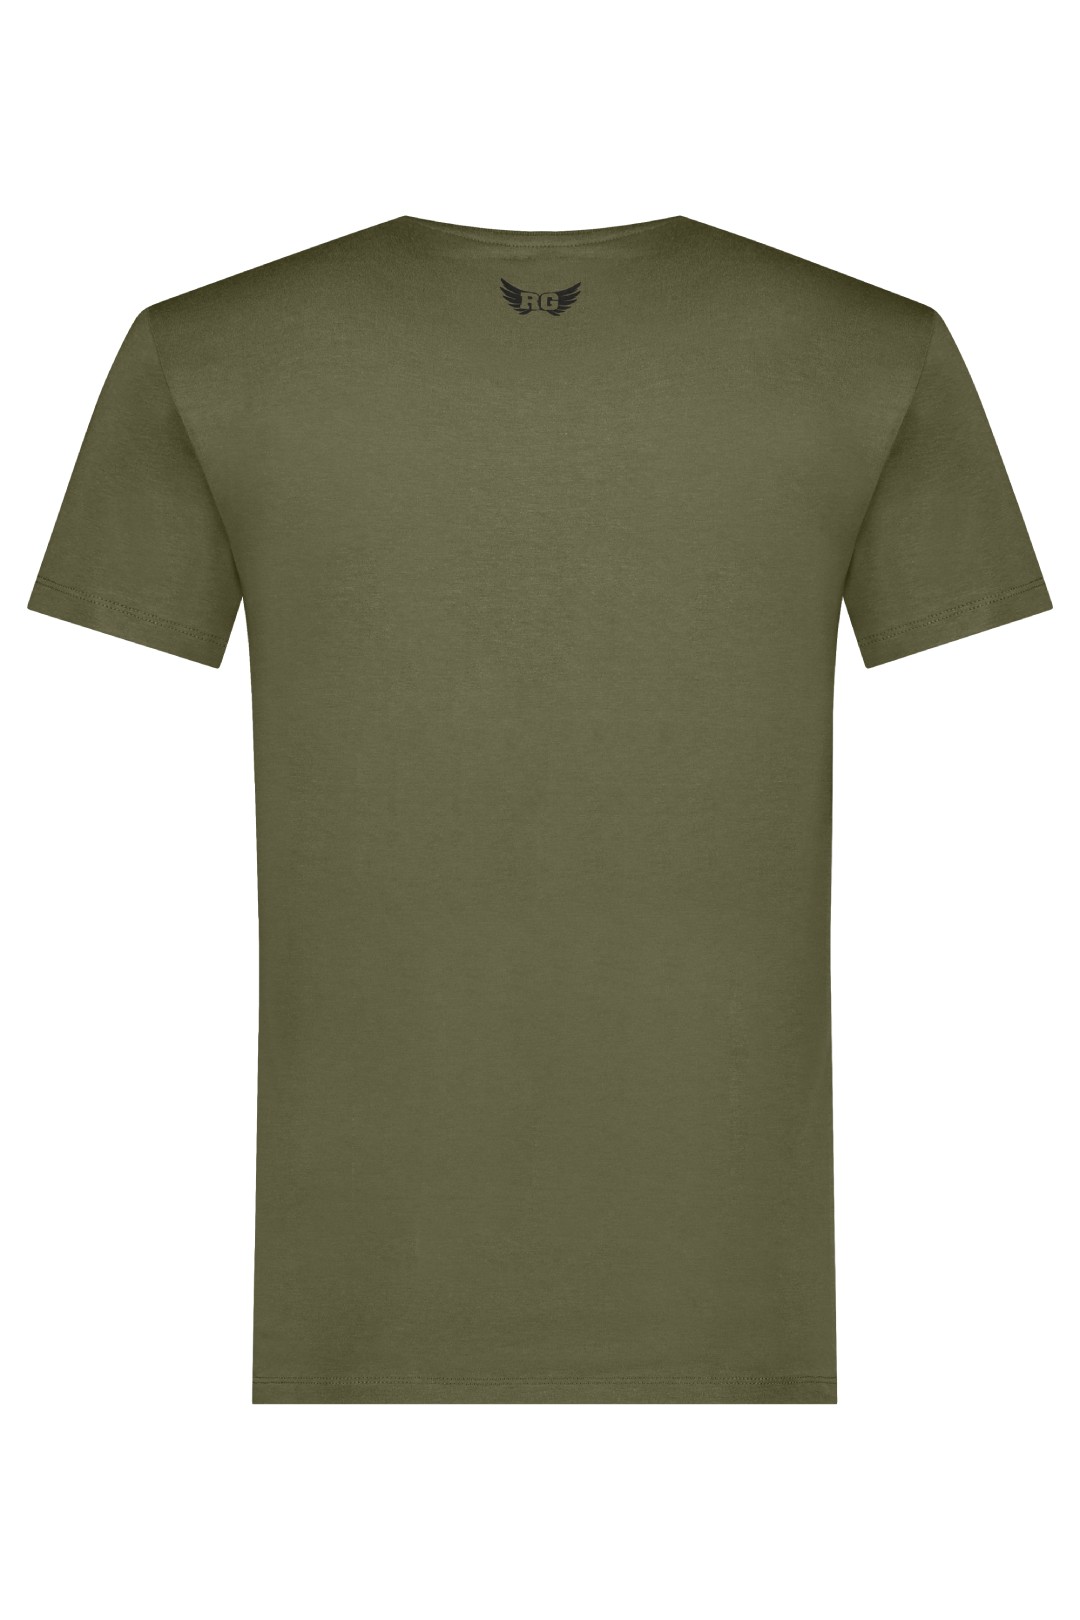 Lang yoga shirt Moksha Zen-Olive-4033306